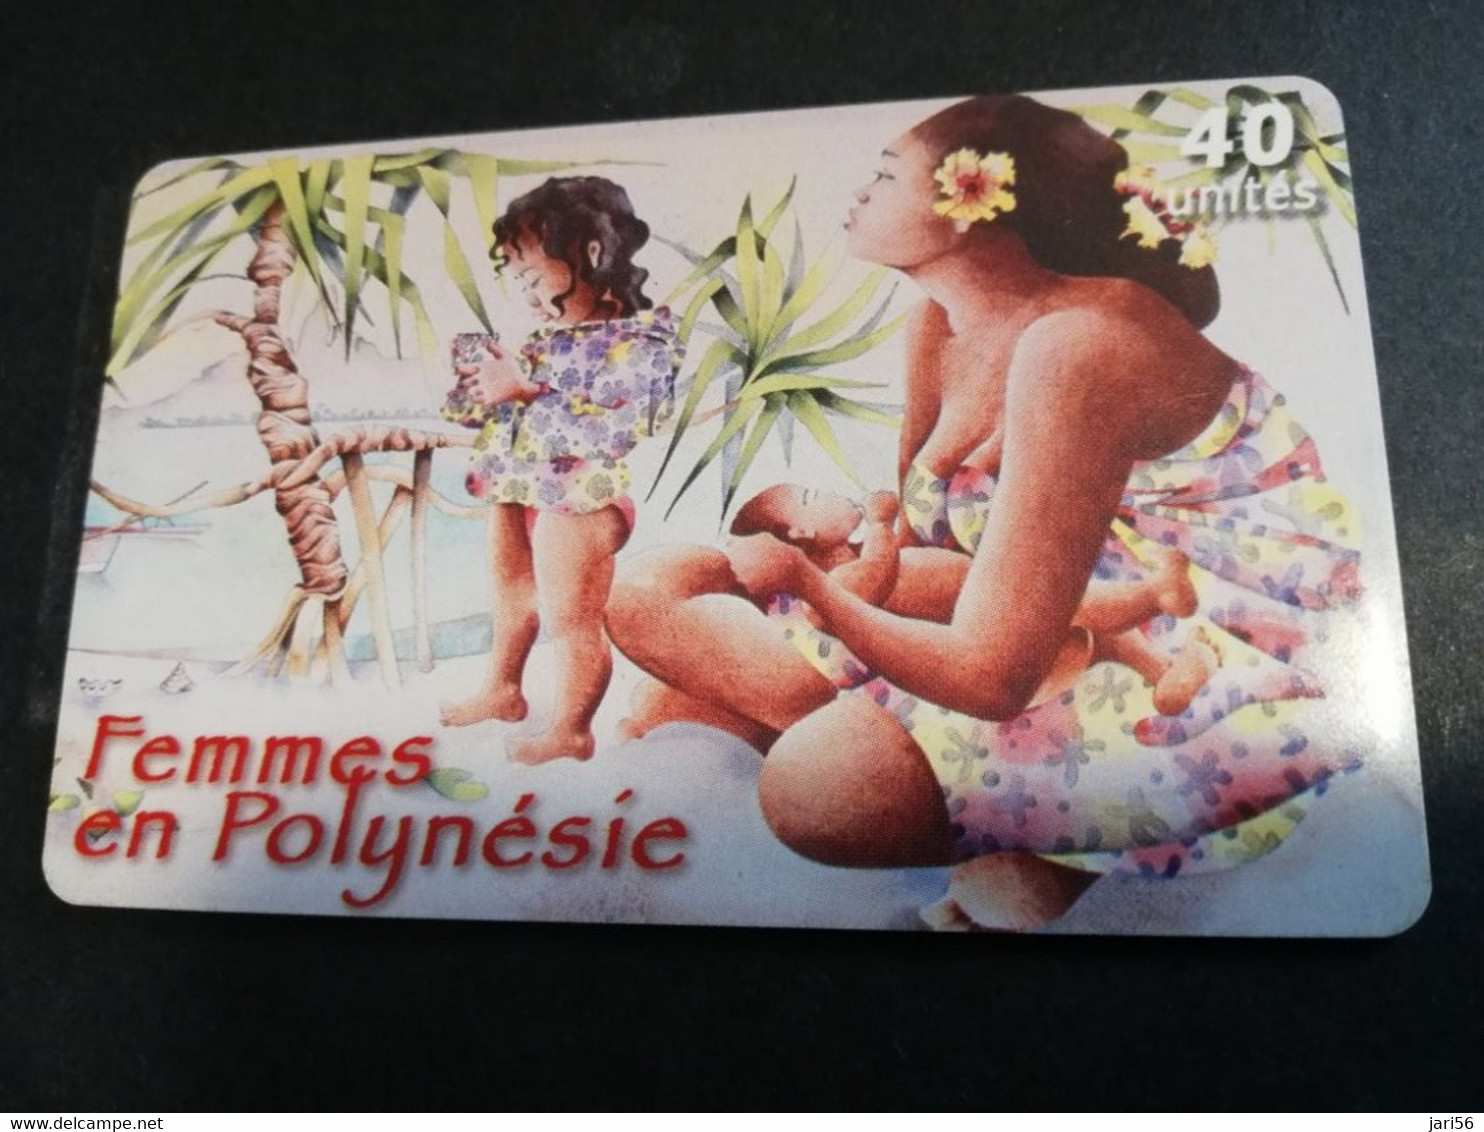 POLINESIA FRANCAISE  CHIPCARD  40 UNITS  FEMMES EN POLYNESIE                   **4941** - Frans-Polynesië